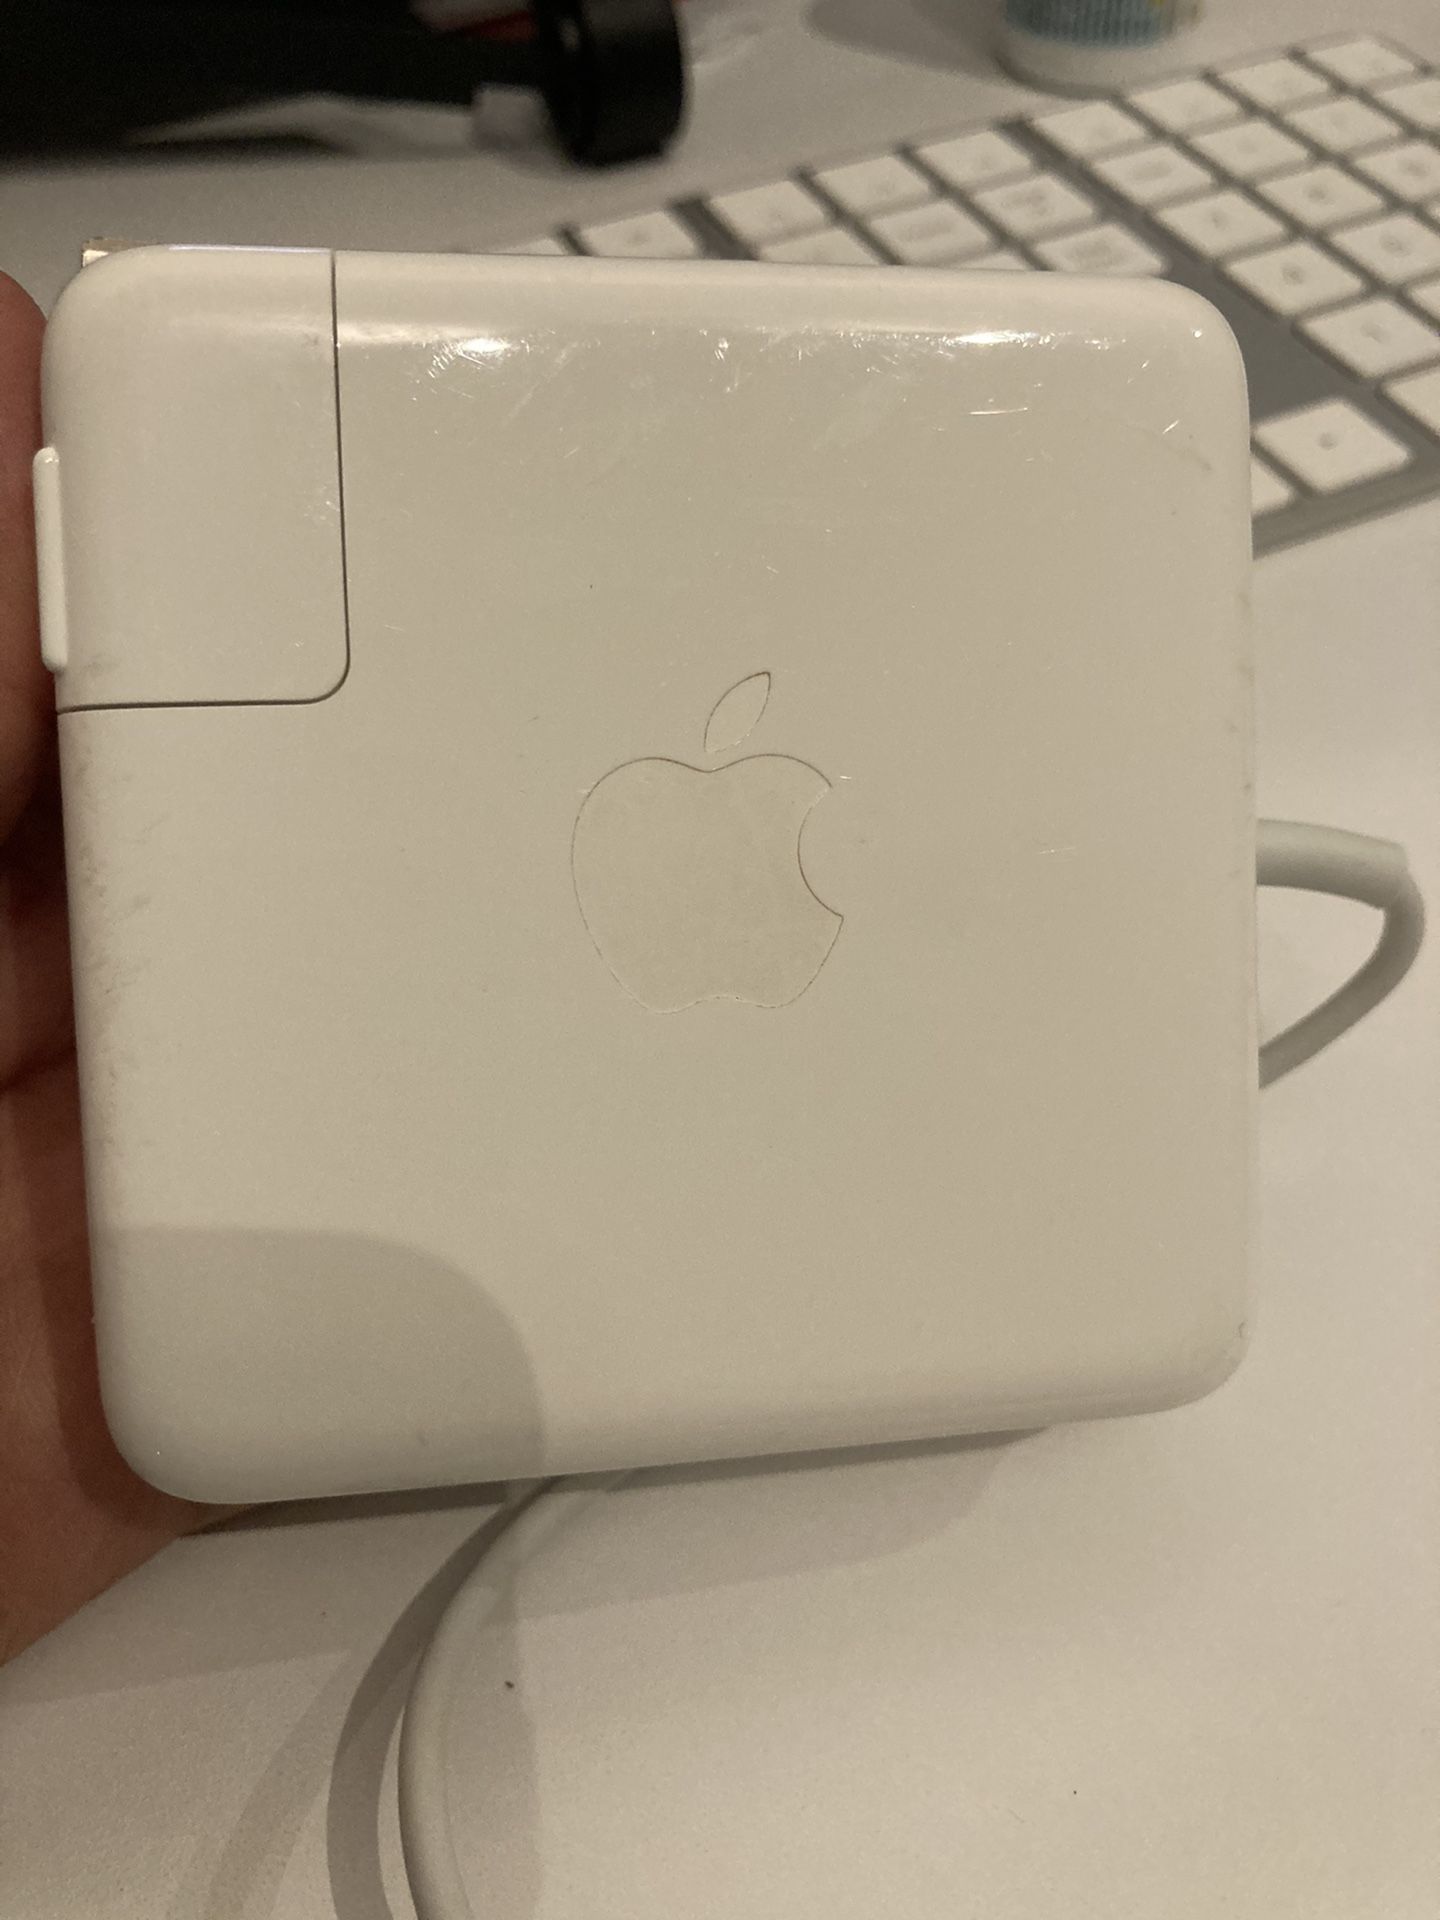 Apple MacBook Pro 85W MagSafe 2 Power Adapter